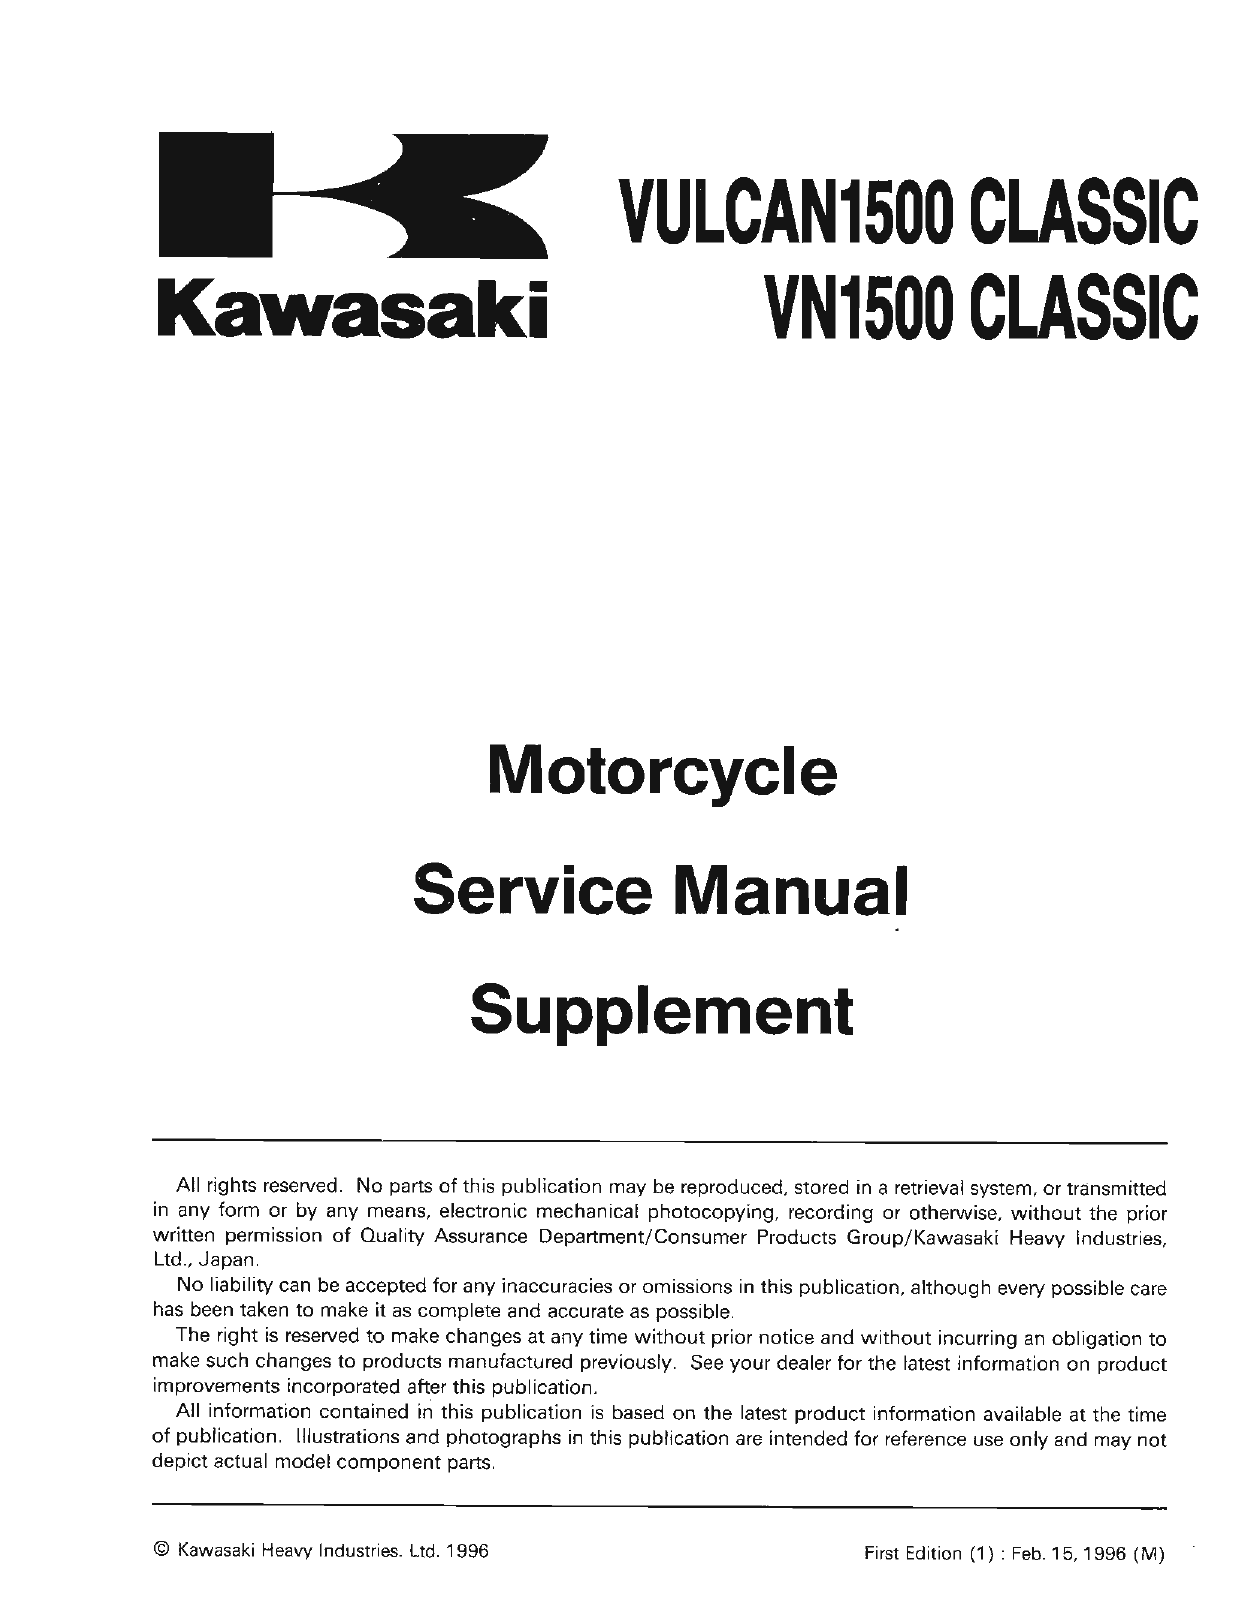 1987-2004 Kawasaki VN 1500 Classic, Vulcan 1500 Classic service manual Preview image 3